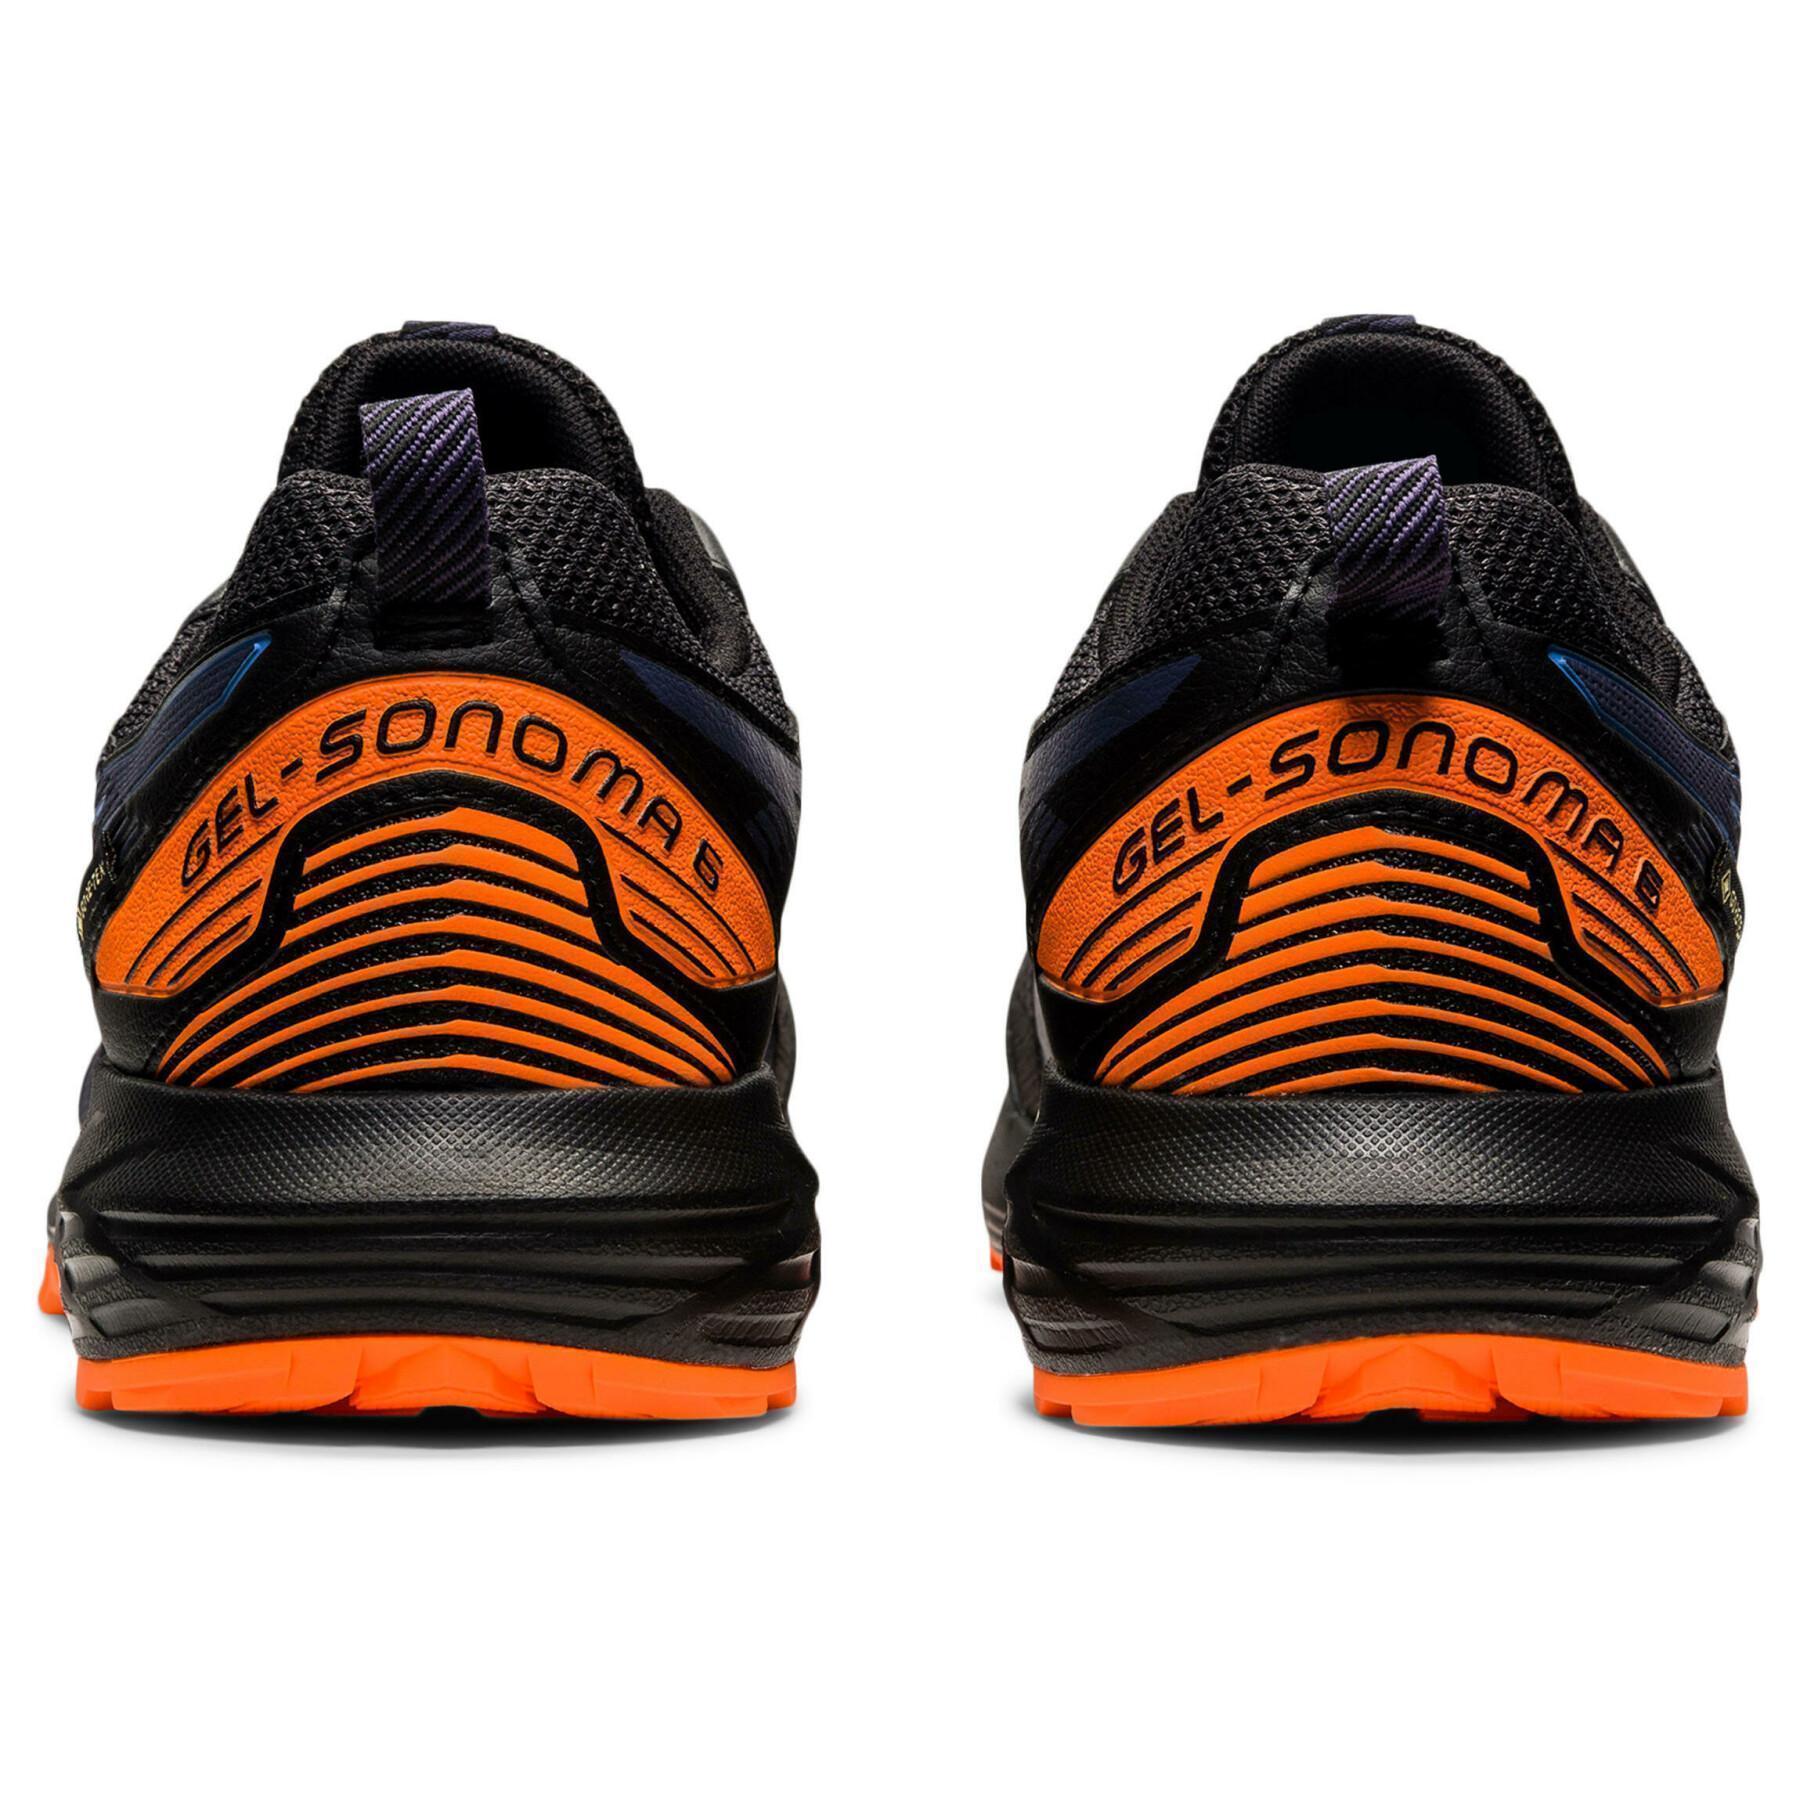 Chaussures Asics Gel-Sonoma 6 G-Tx